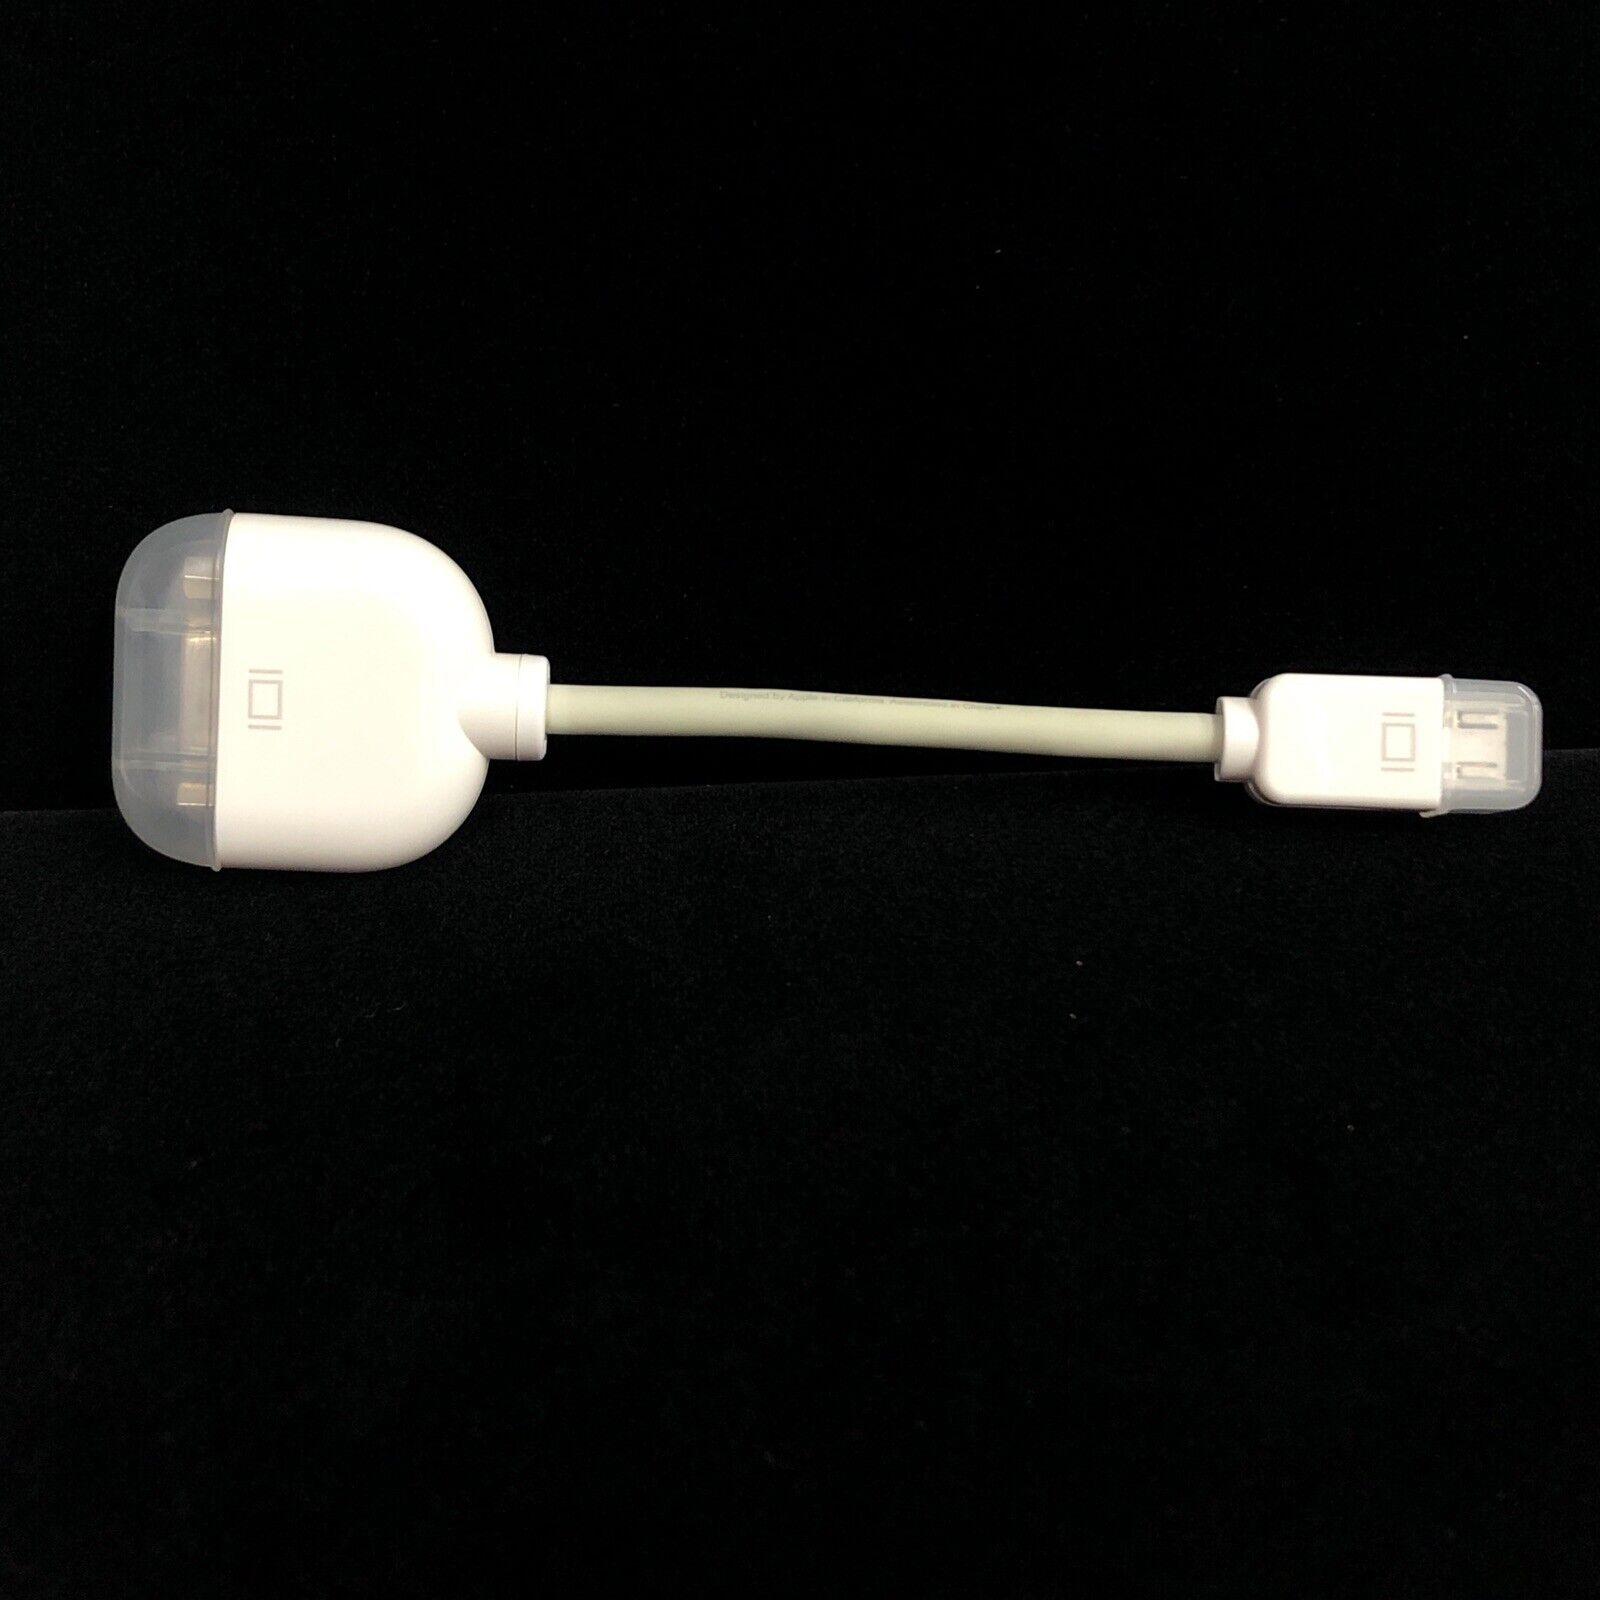 Apple Mini VGA to VGA Adapter 603-0607 ~ iBook, eMac, Powerbook, NEW IN PACKAGE 